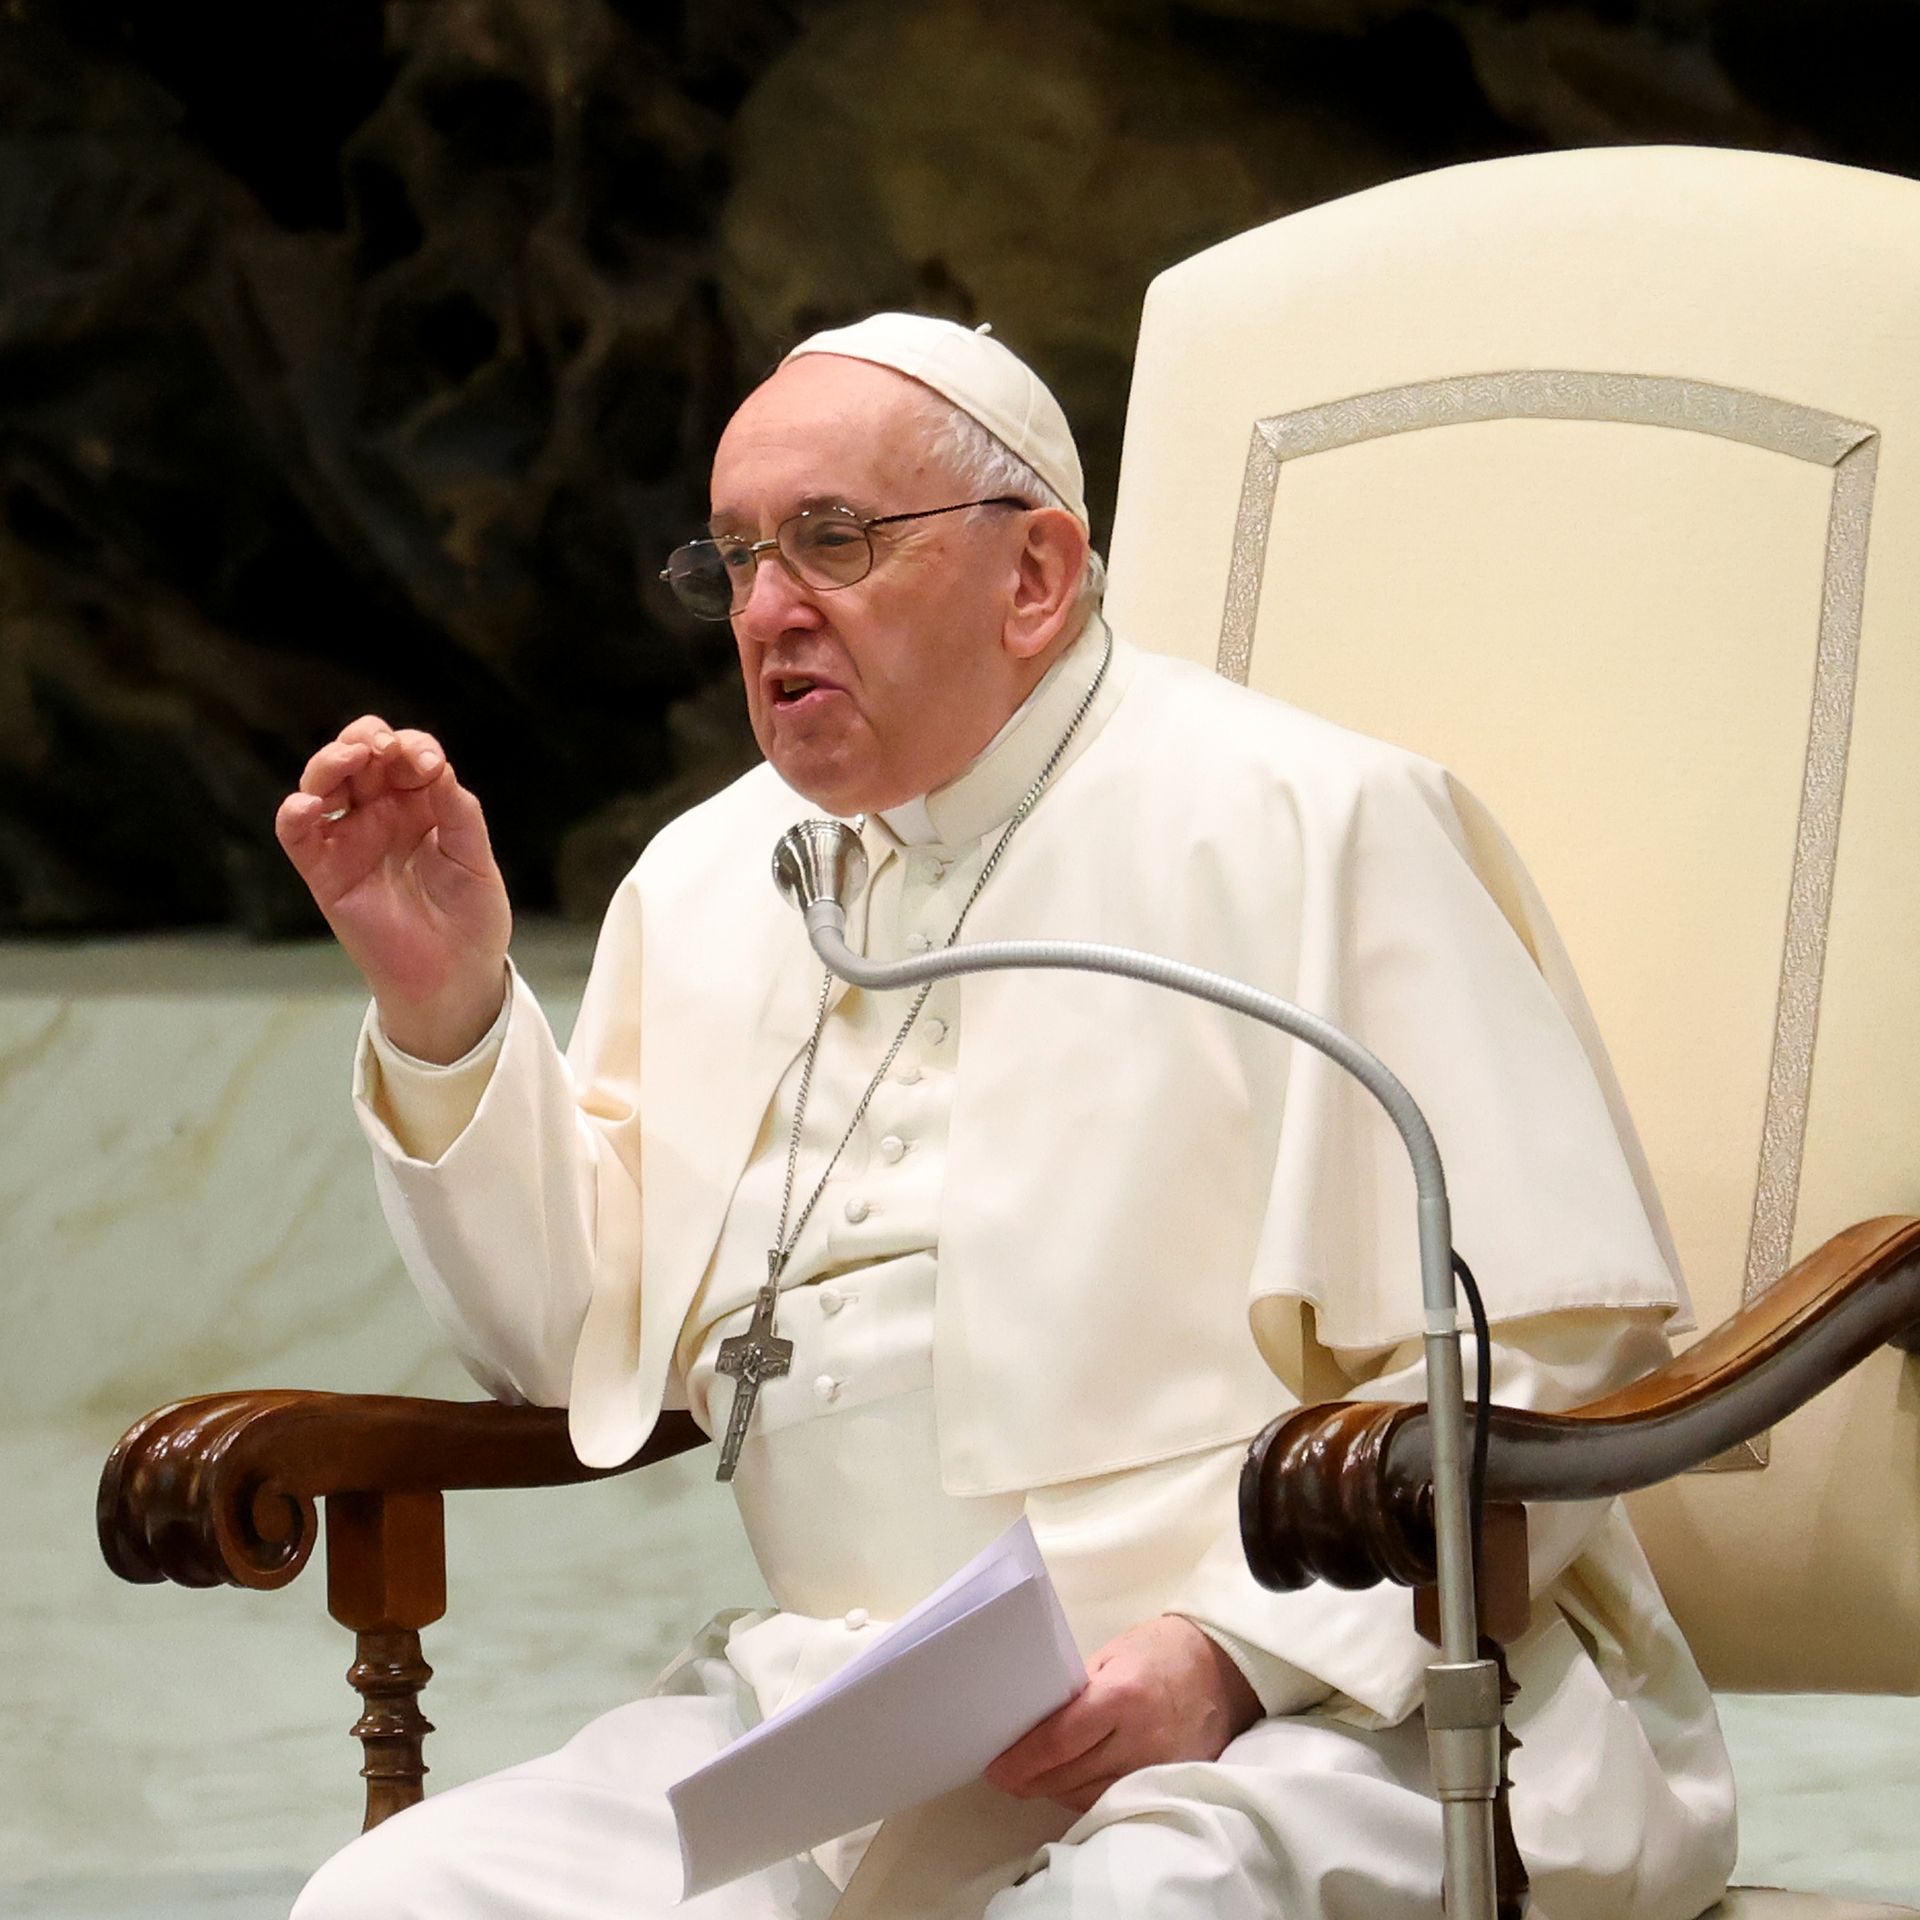 skyde klar Fortæl mig Pope Francis says domestic violence is "almost satanic"